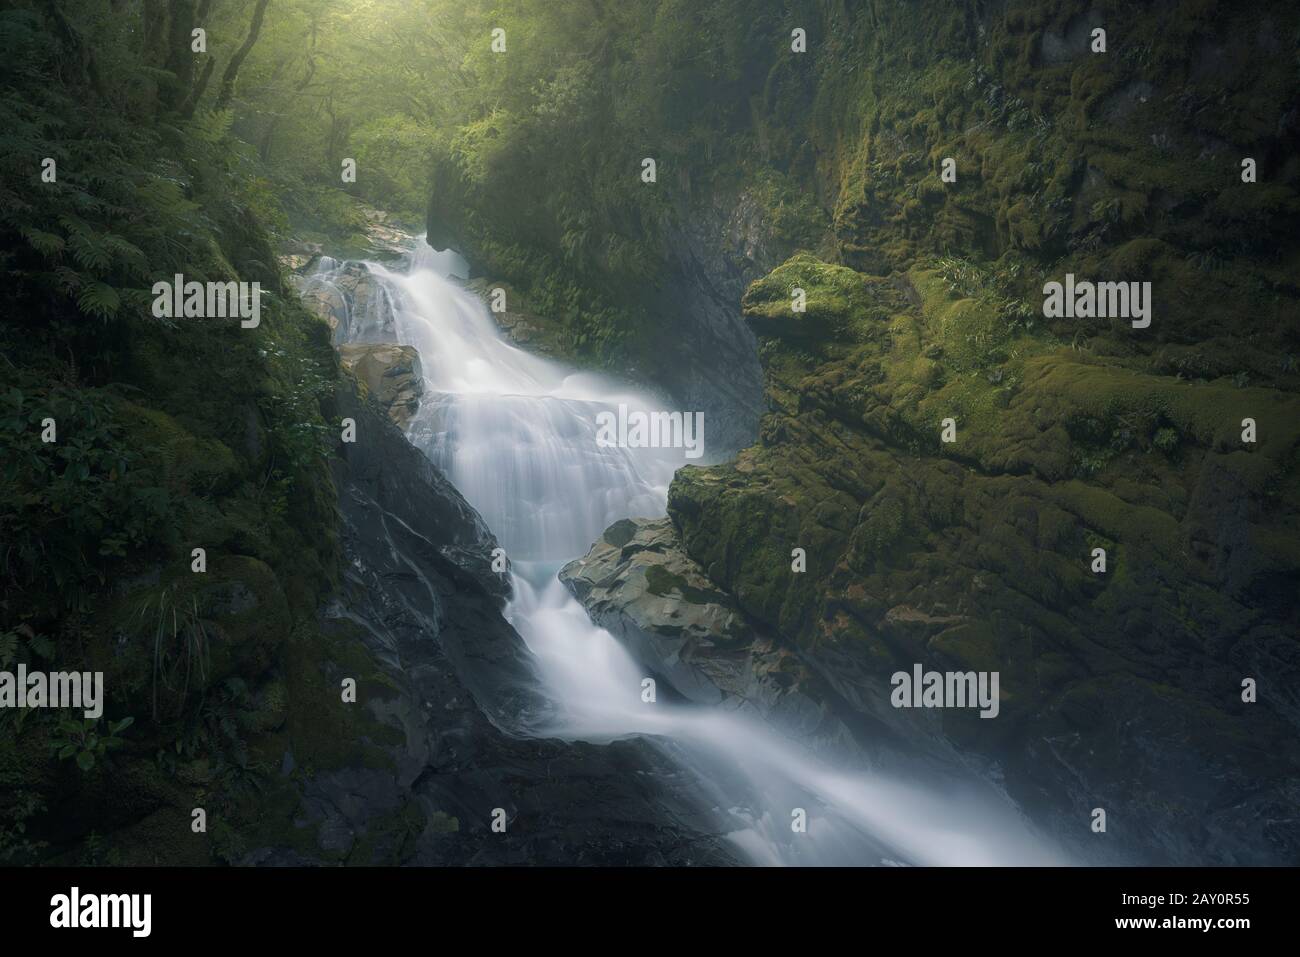 Cascata in una foresta, Nuova Zelanda Foto Stock